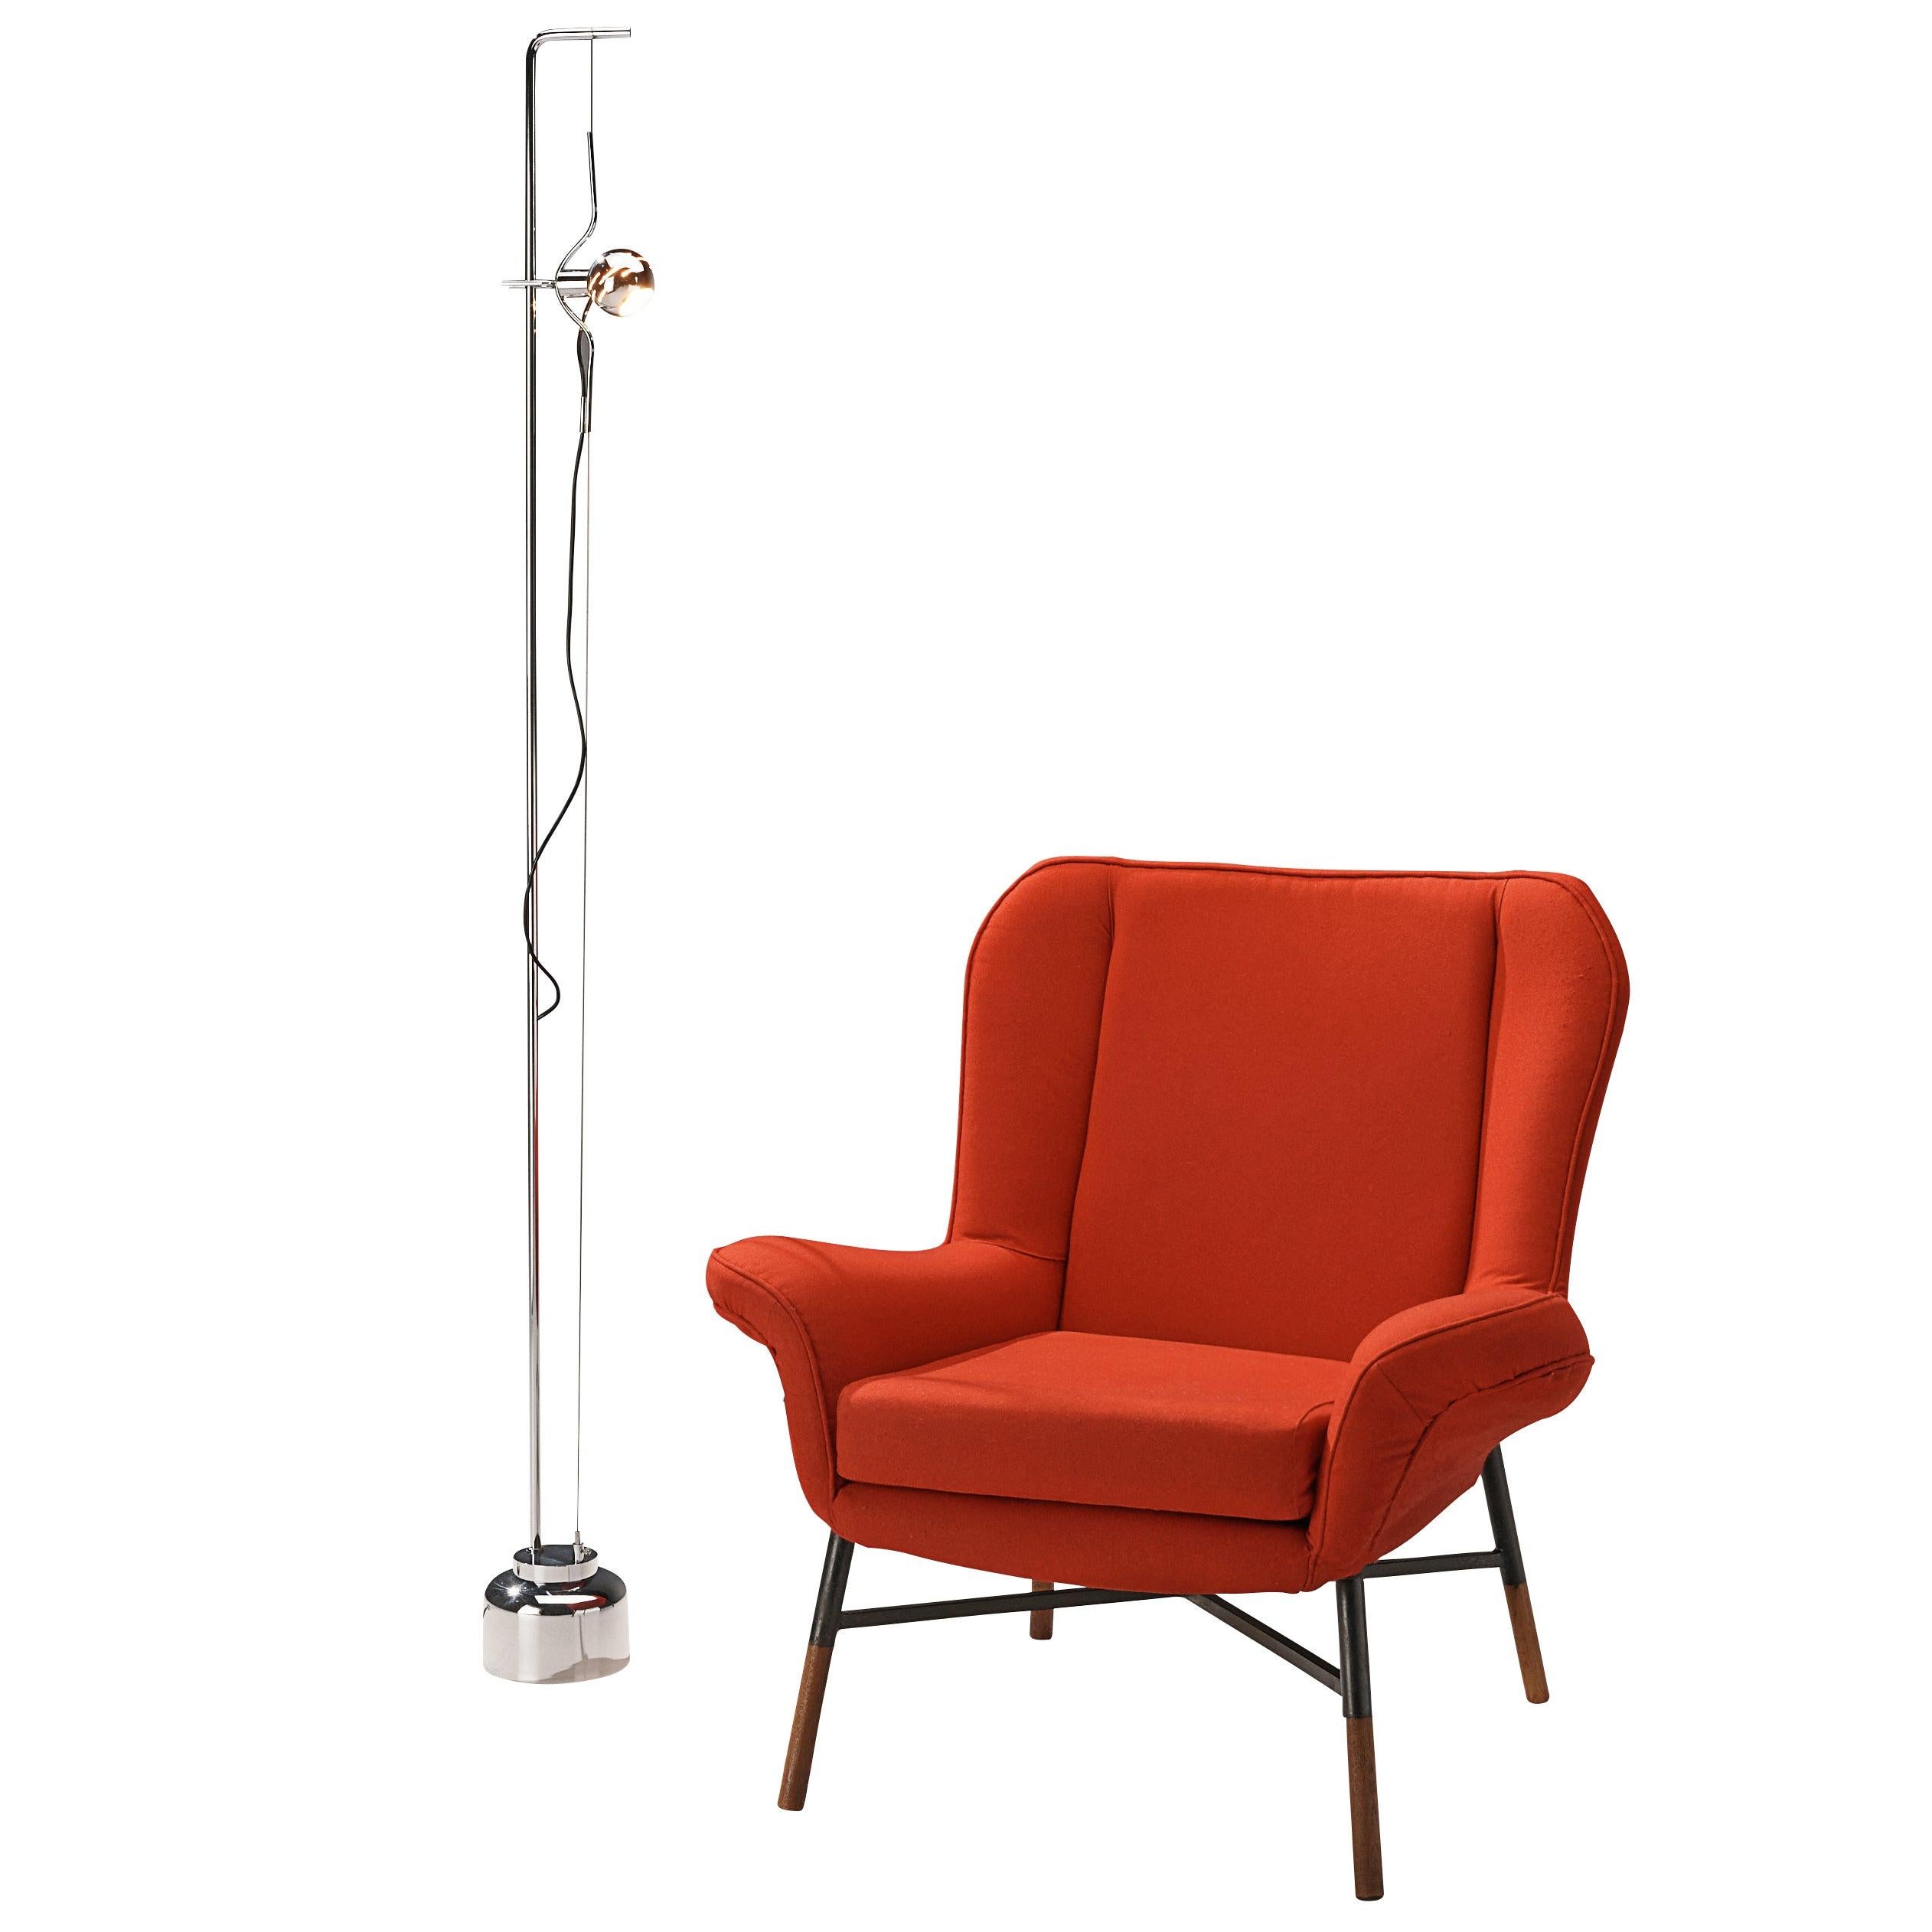 BBPR 'Giulietta' Lounge Chair and Angelo Lelii 'Filosfera' Floor Lamp